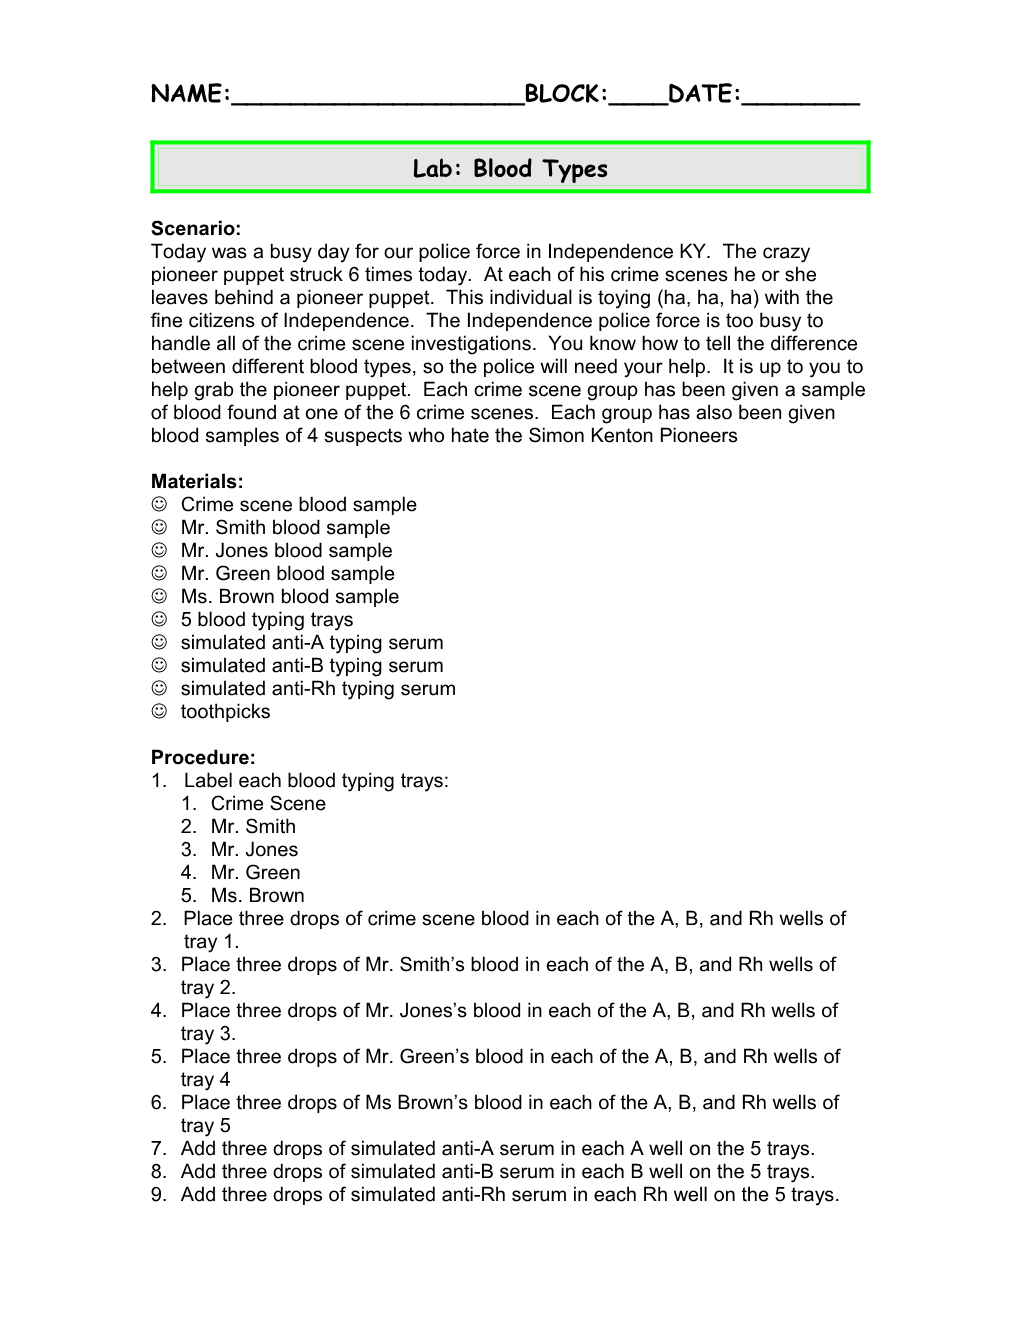 Lab: Blood Types